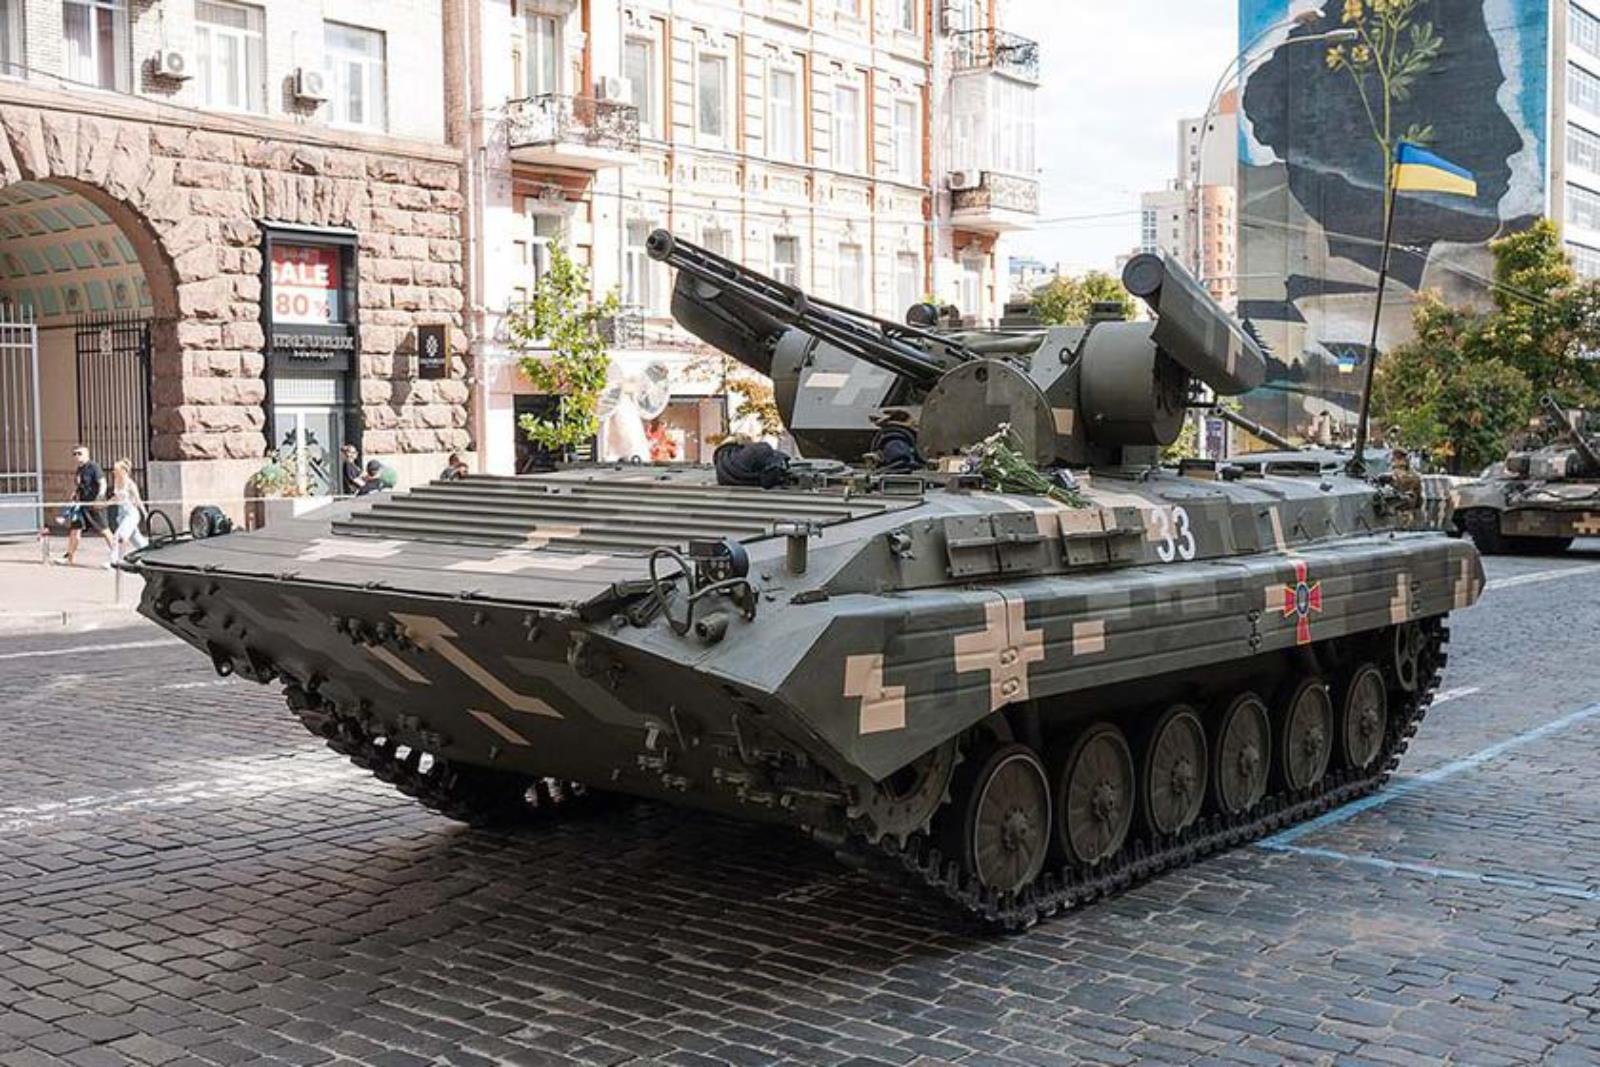 Ulepszyć grata i naprawić błędy ZSRR, czyli jak Ukraina modernizuje BMP-1 do BMP-1TS